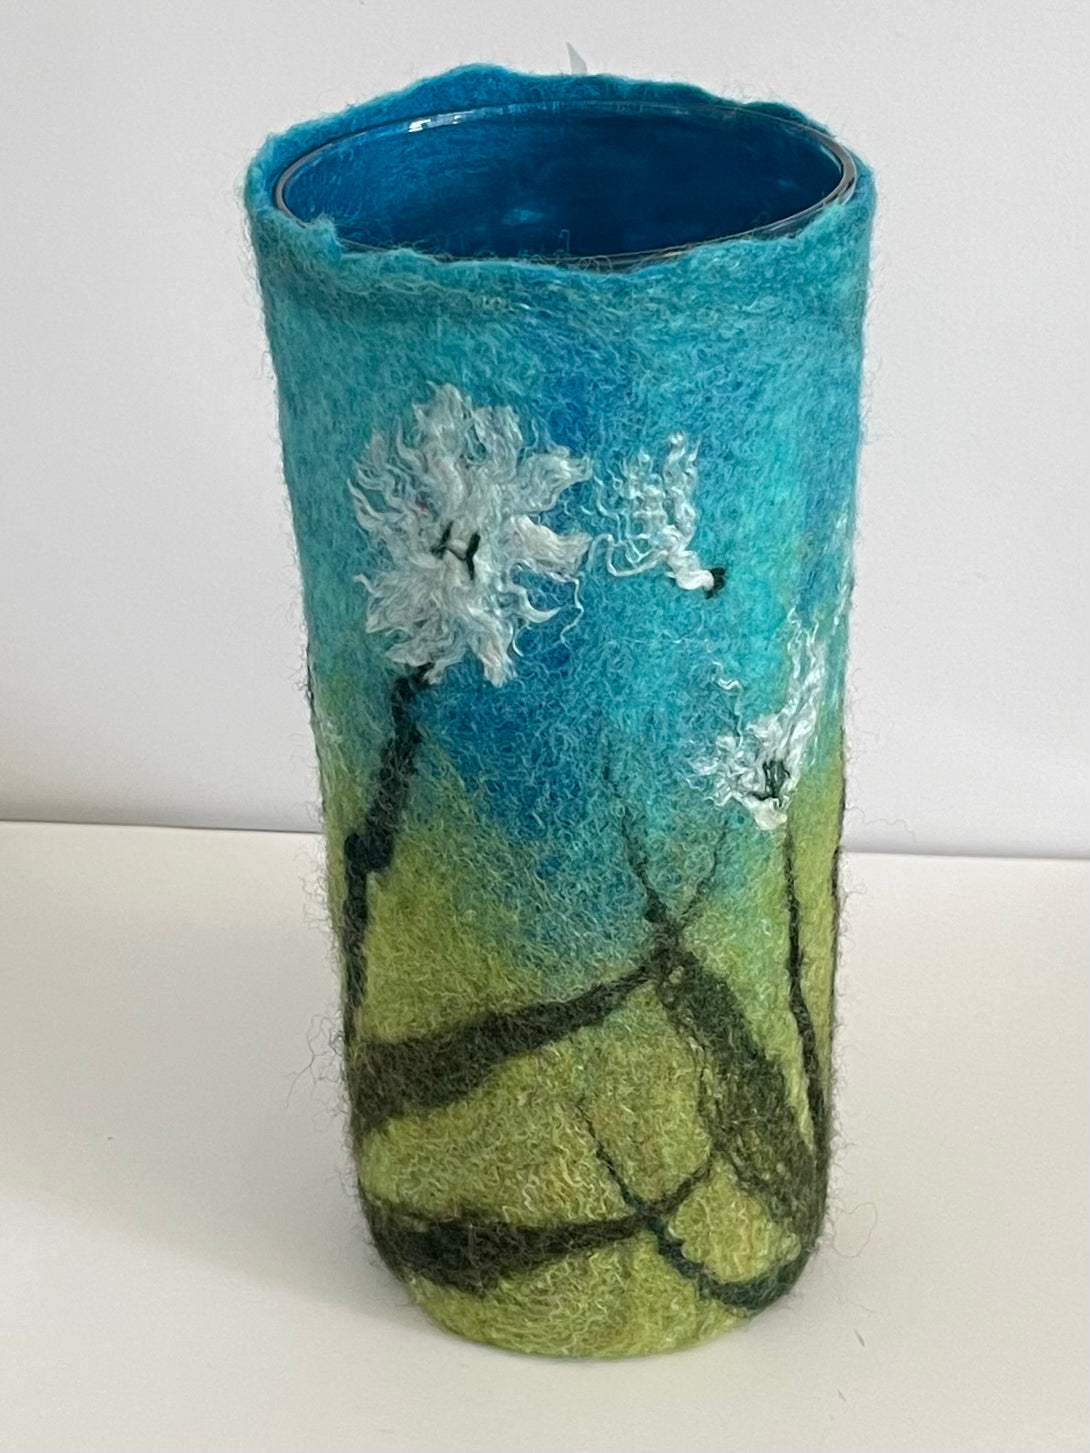 Darrell Giraldeau - Fibre Art - Felted vase with glass insert - Darrell Giraldeau - McMillan Arts Centre Gallery, Gift Shop and Box Office - Vancouver Island Art Gallery